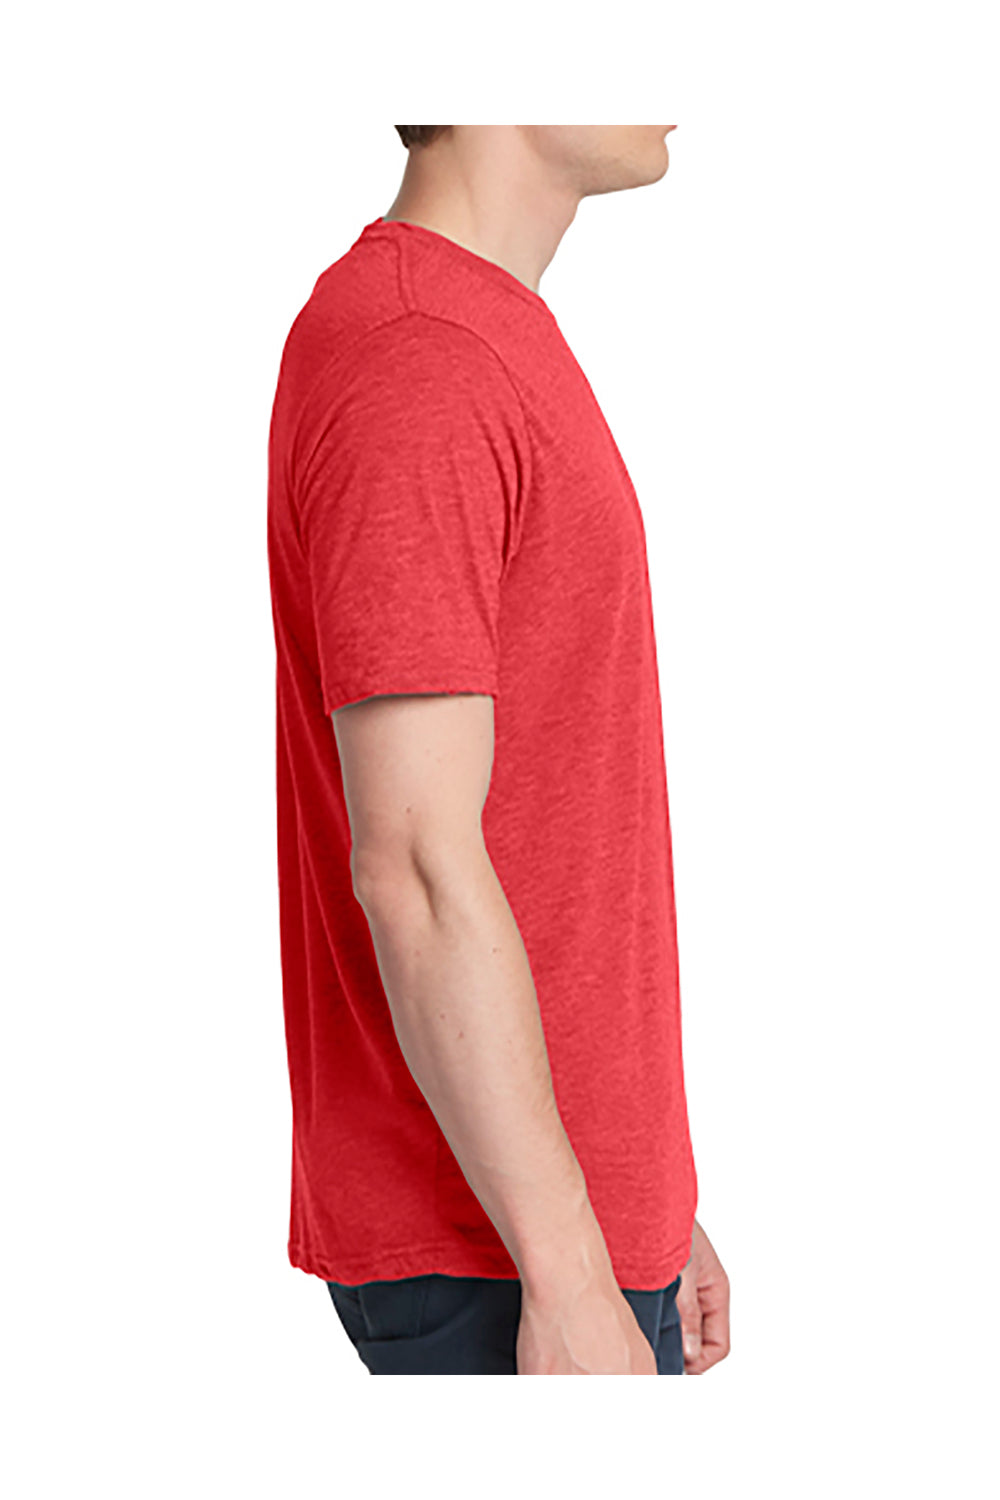 Next Level 6200 Mens Jersey Short Sleeve Crewneck T-Shirt Red Side